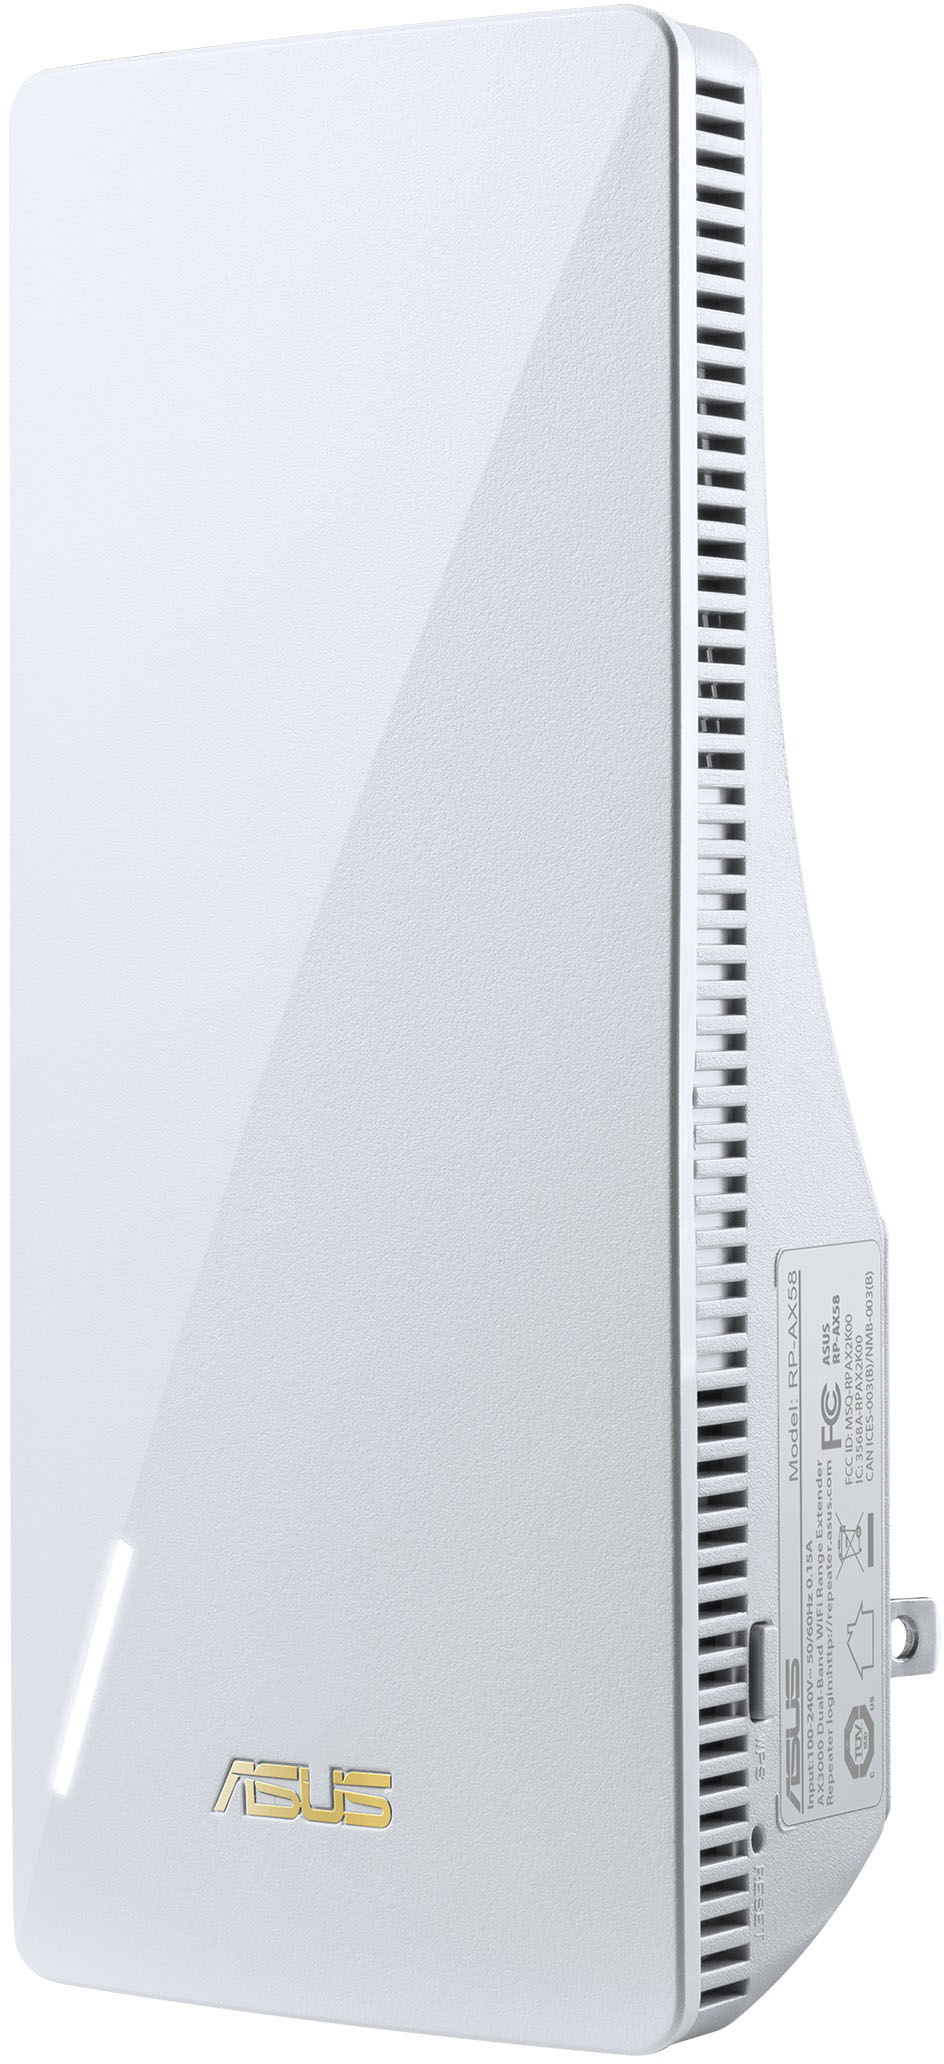 Angle View: ASUS - AX3000 WiFi 6(802.11ax) AiMesh Router - White